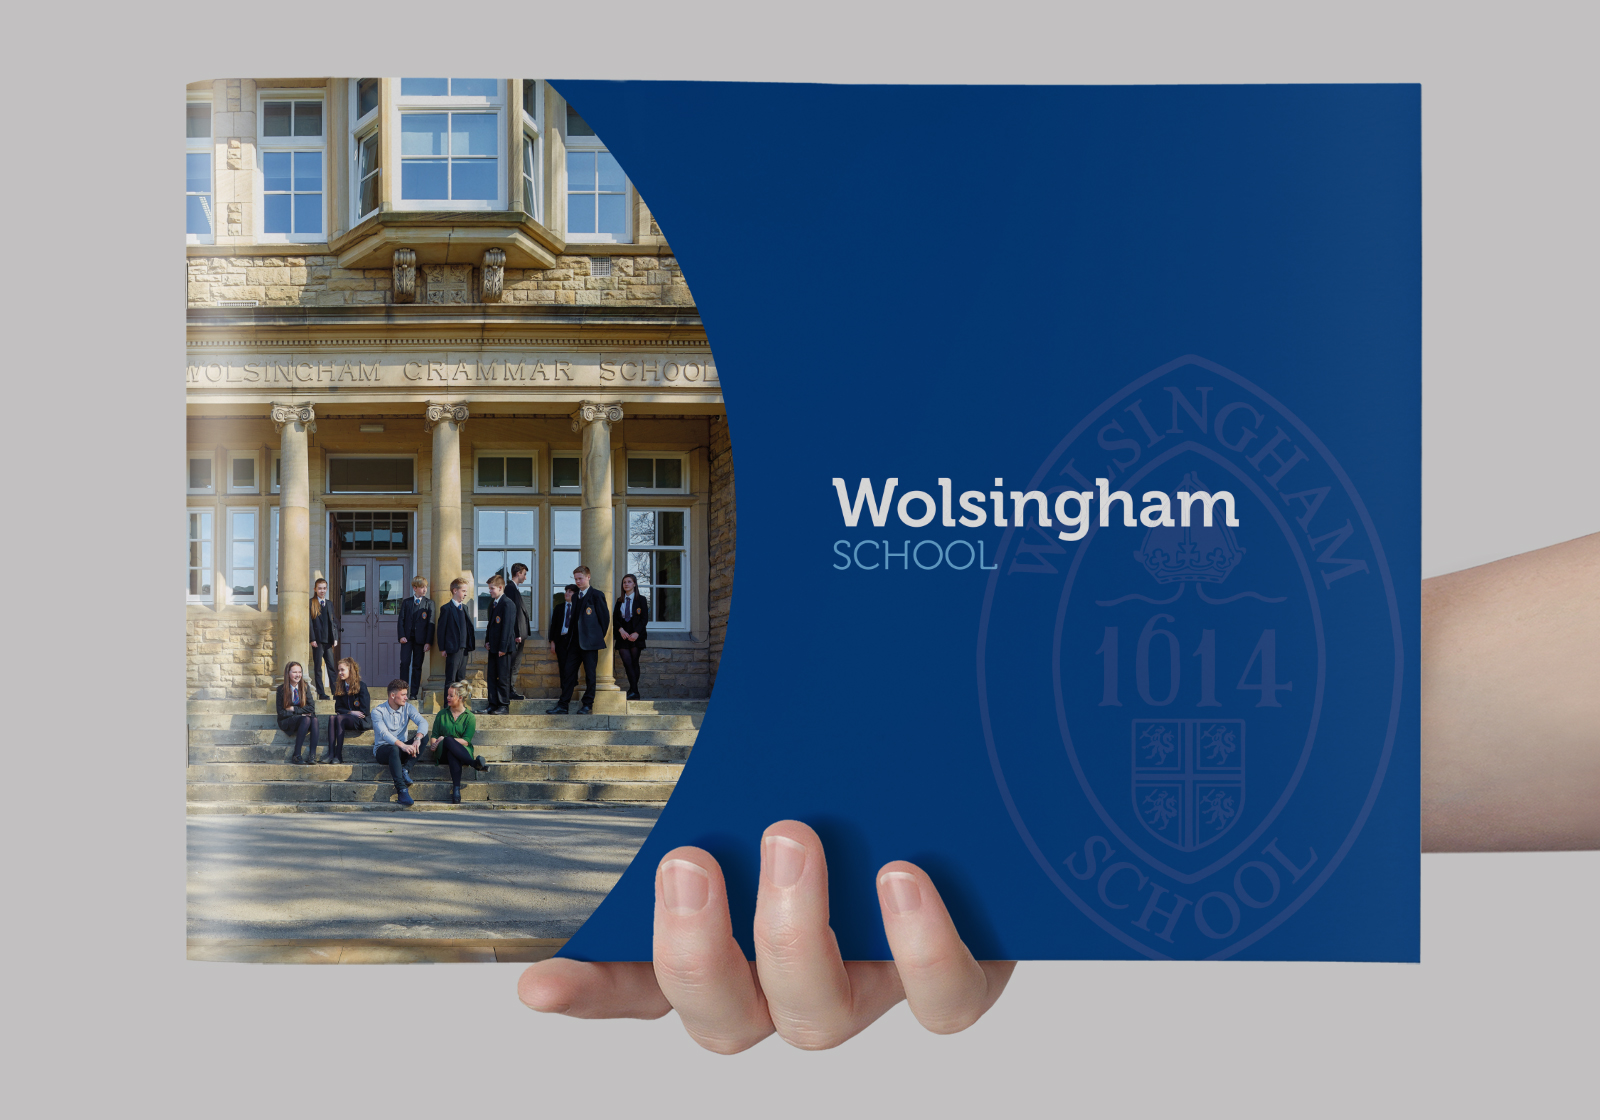 Wolsingham School